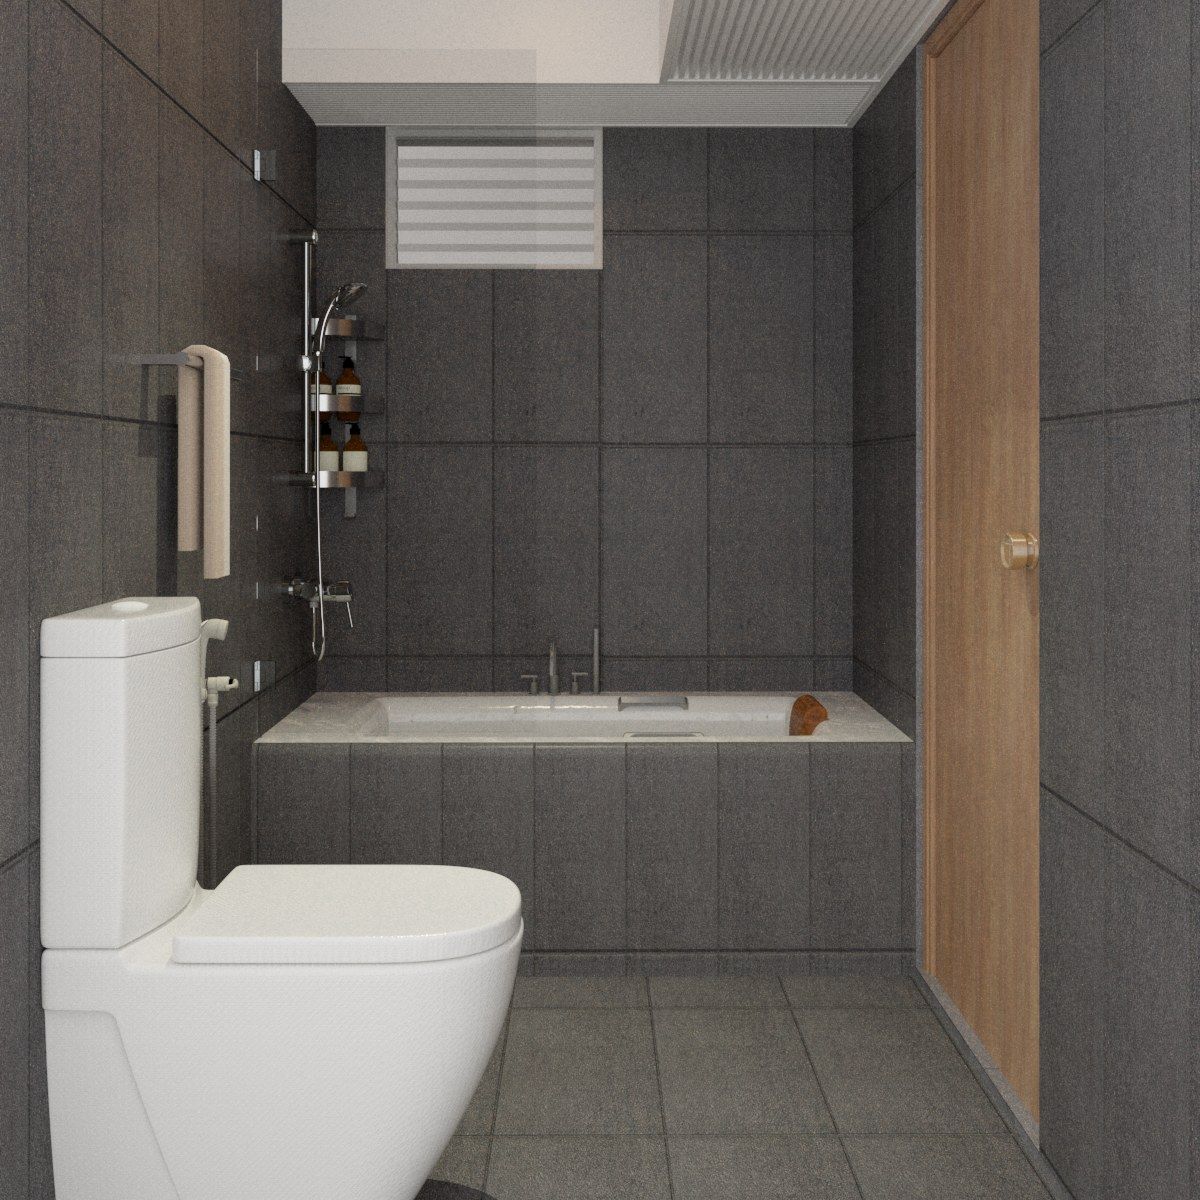 Modern Bathroom Design With Black Tiles And White Bathtub